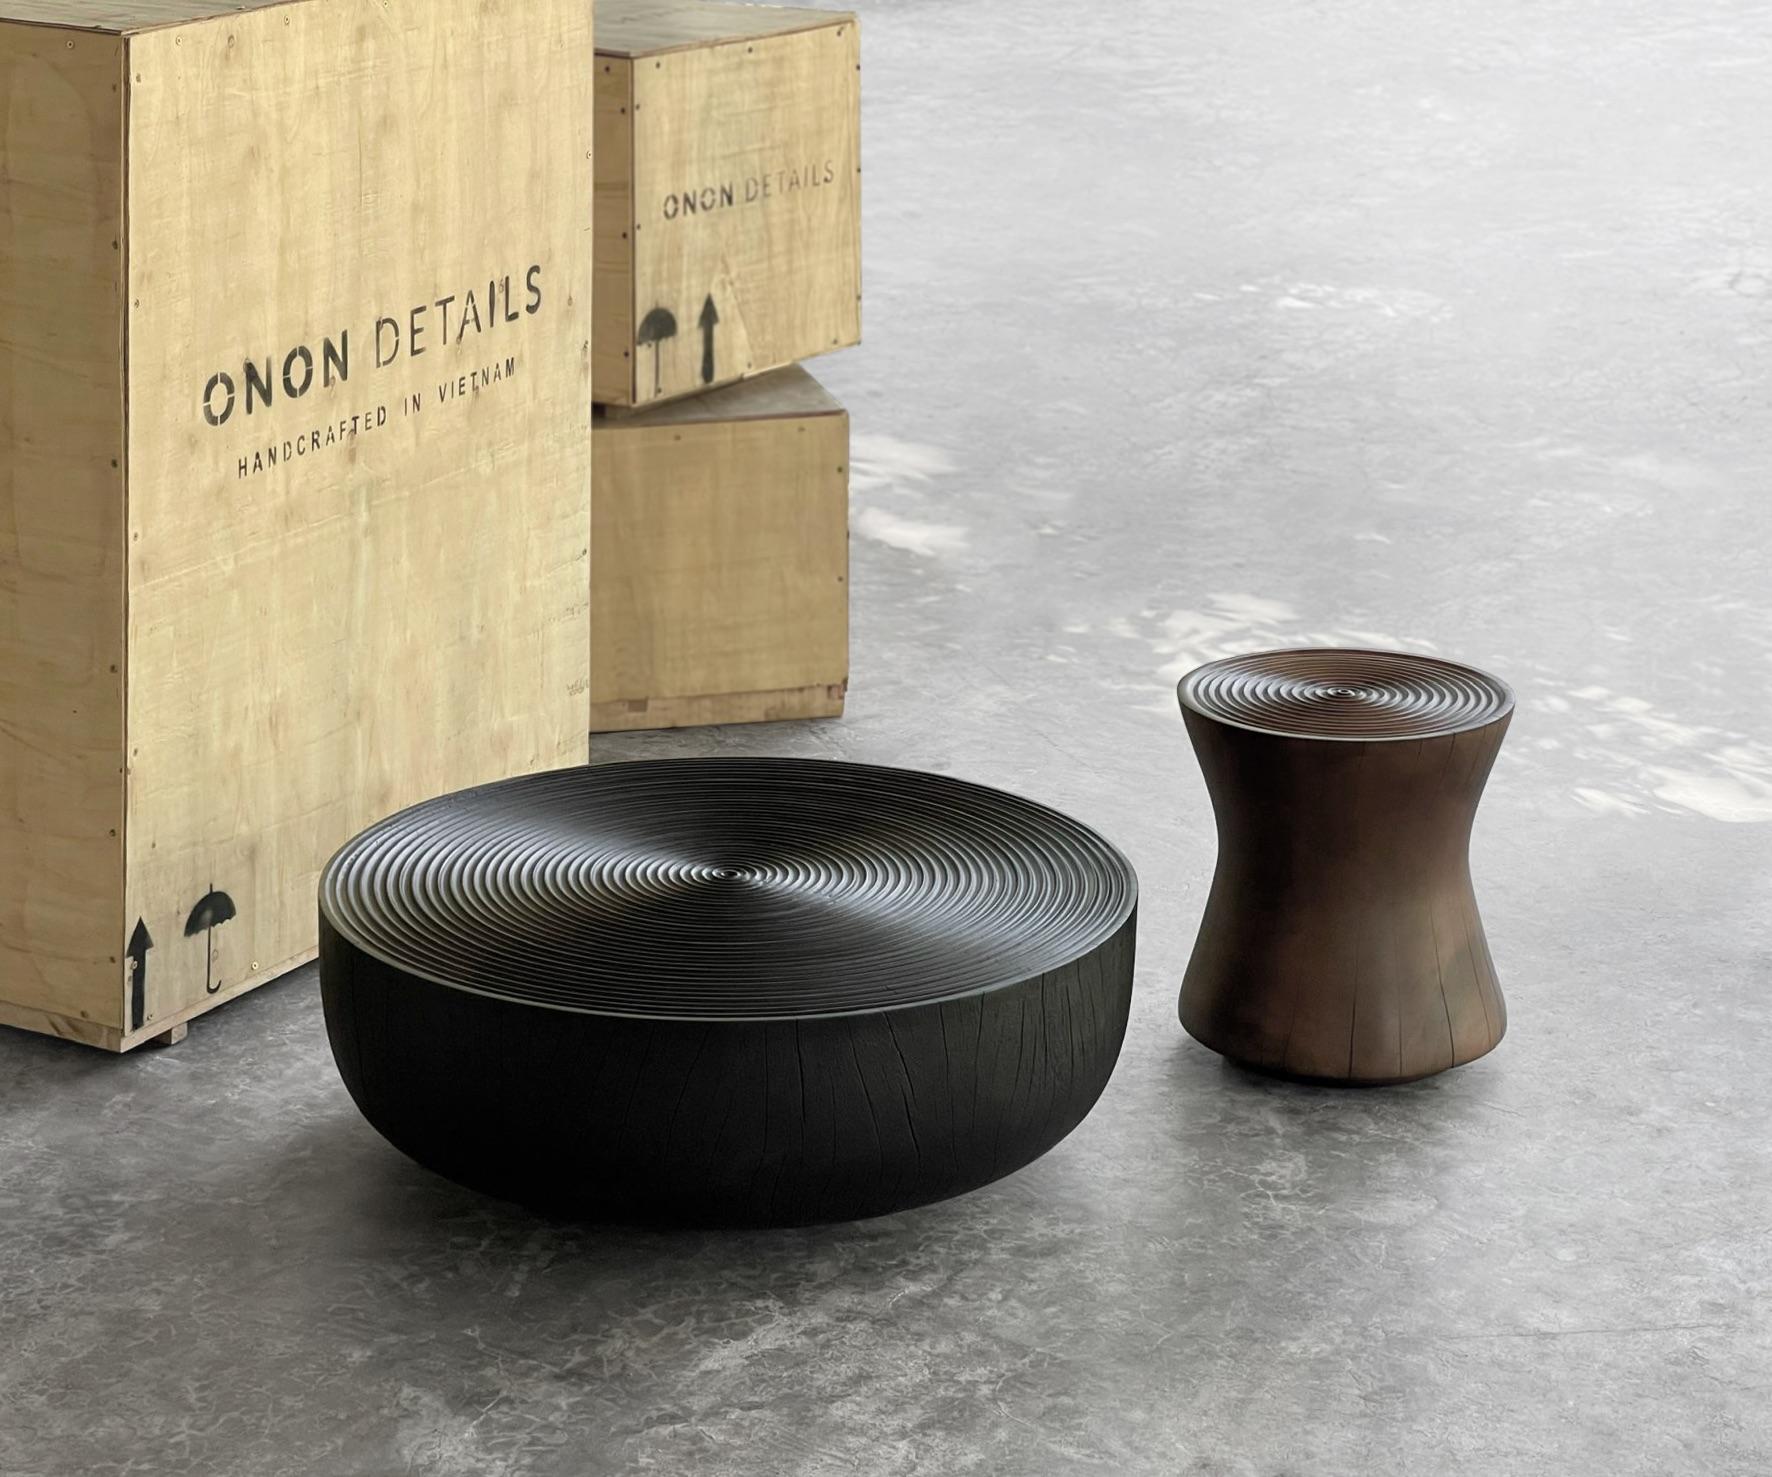 The story behind ONON Details's unique Vietnamese furniture designs